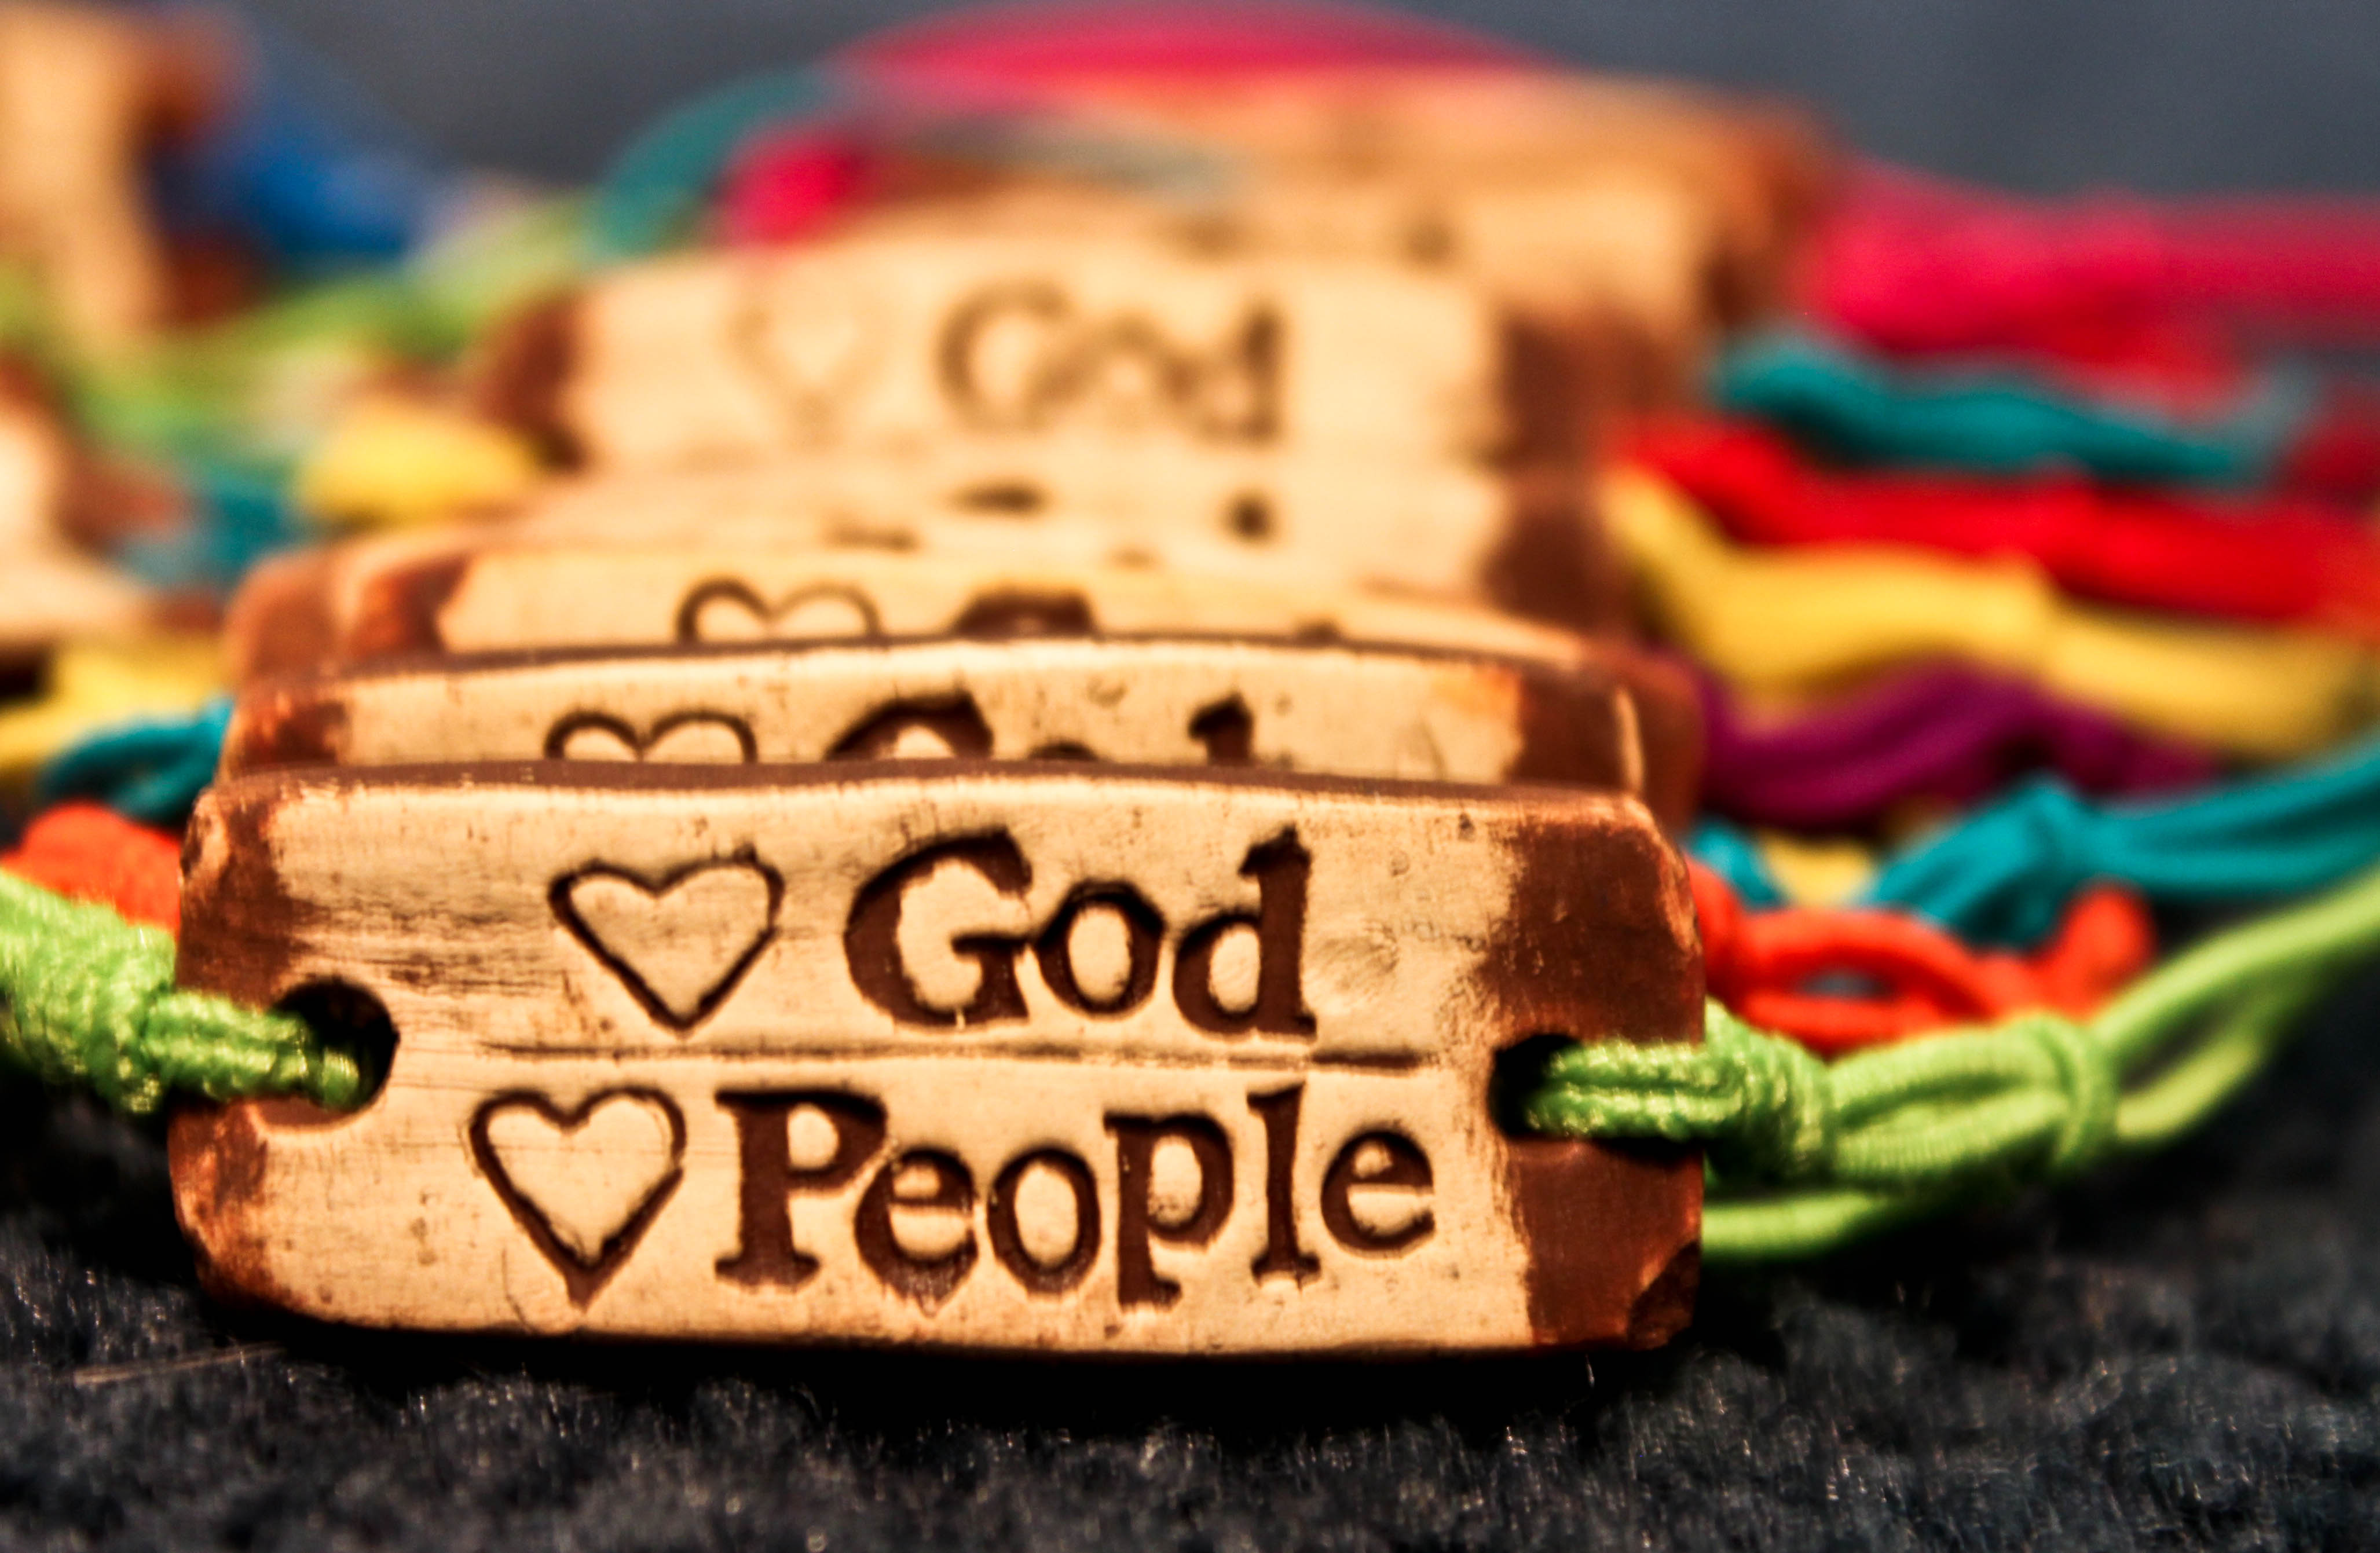 love-god-love-people